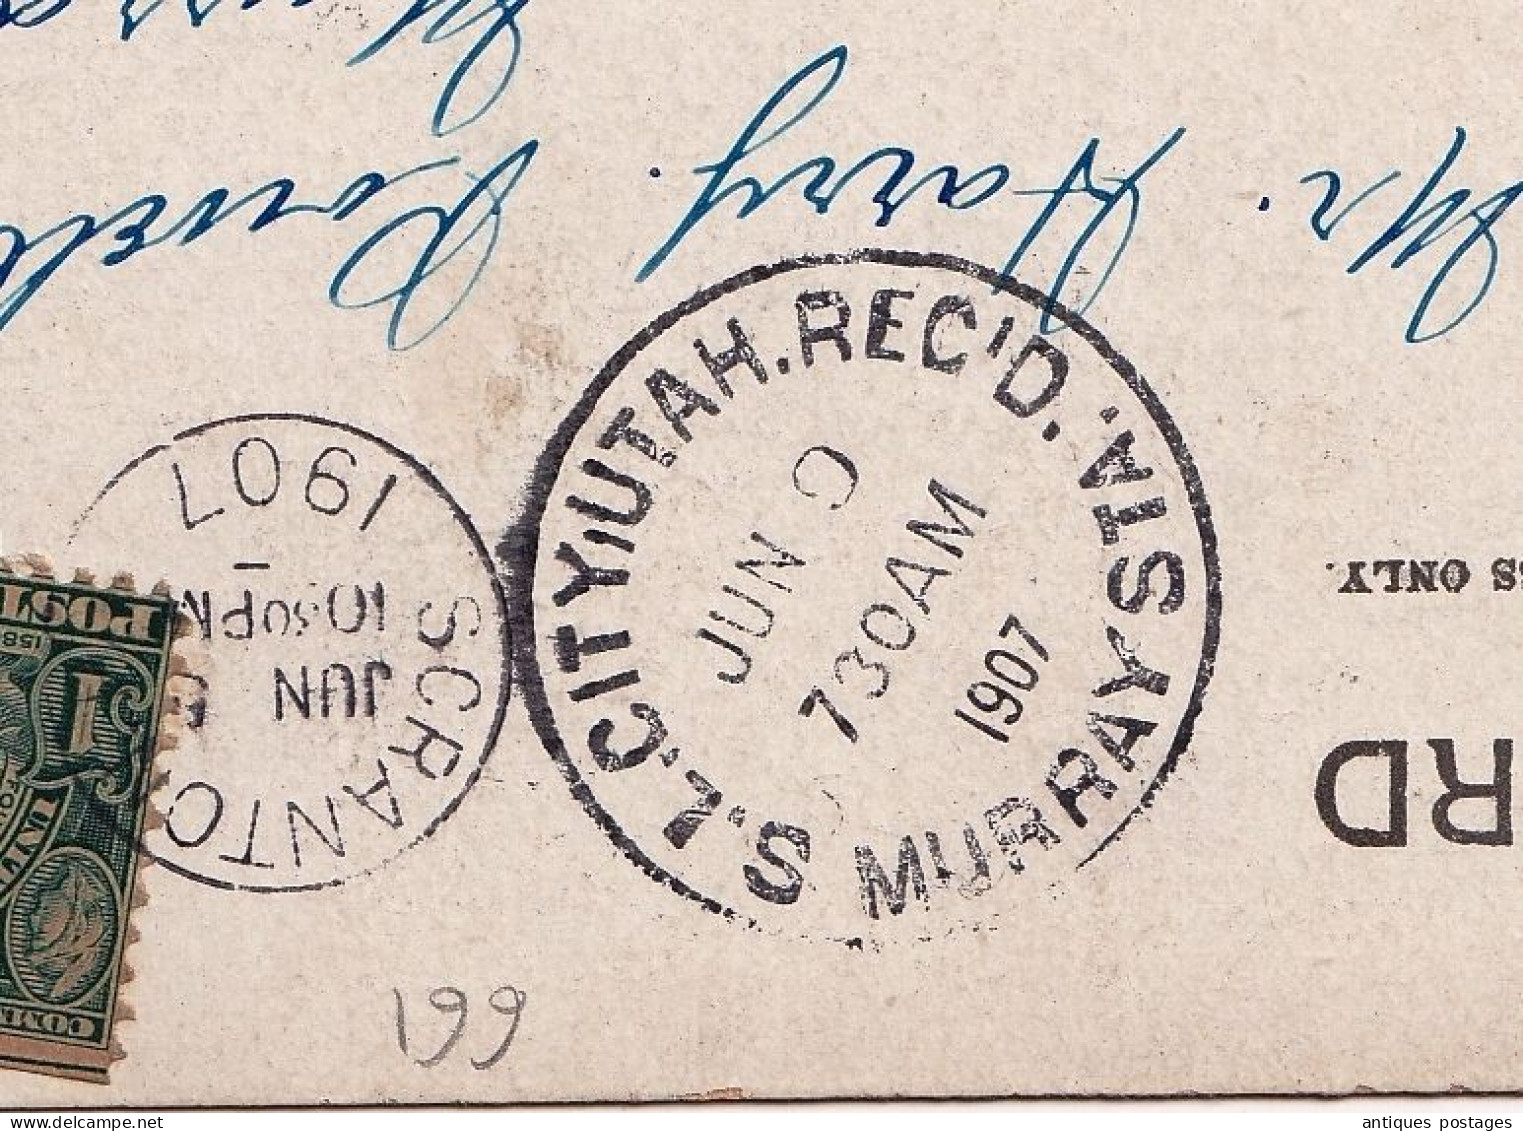 Post Card 1907 SCRANTON Pennsylvania USA Murray Utah Stamp Captain John Smith One Cent - Covers & Documents